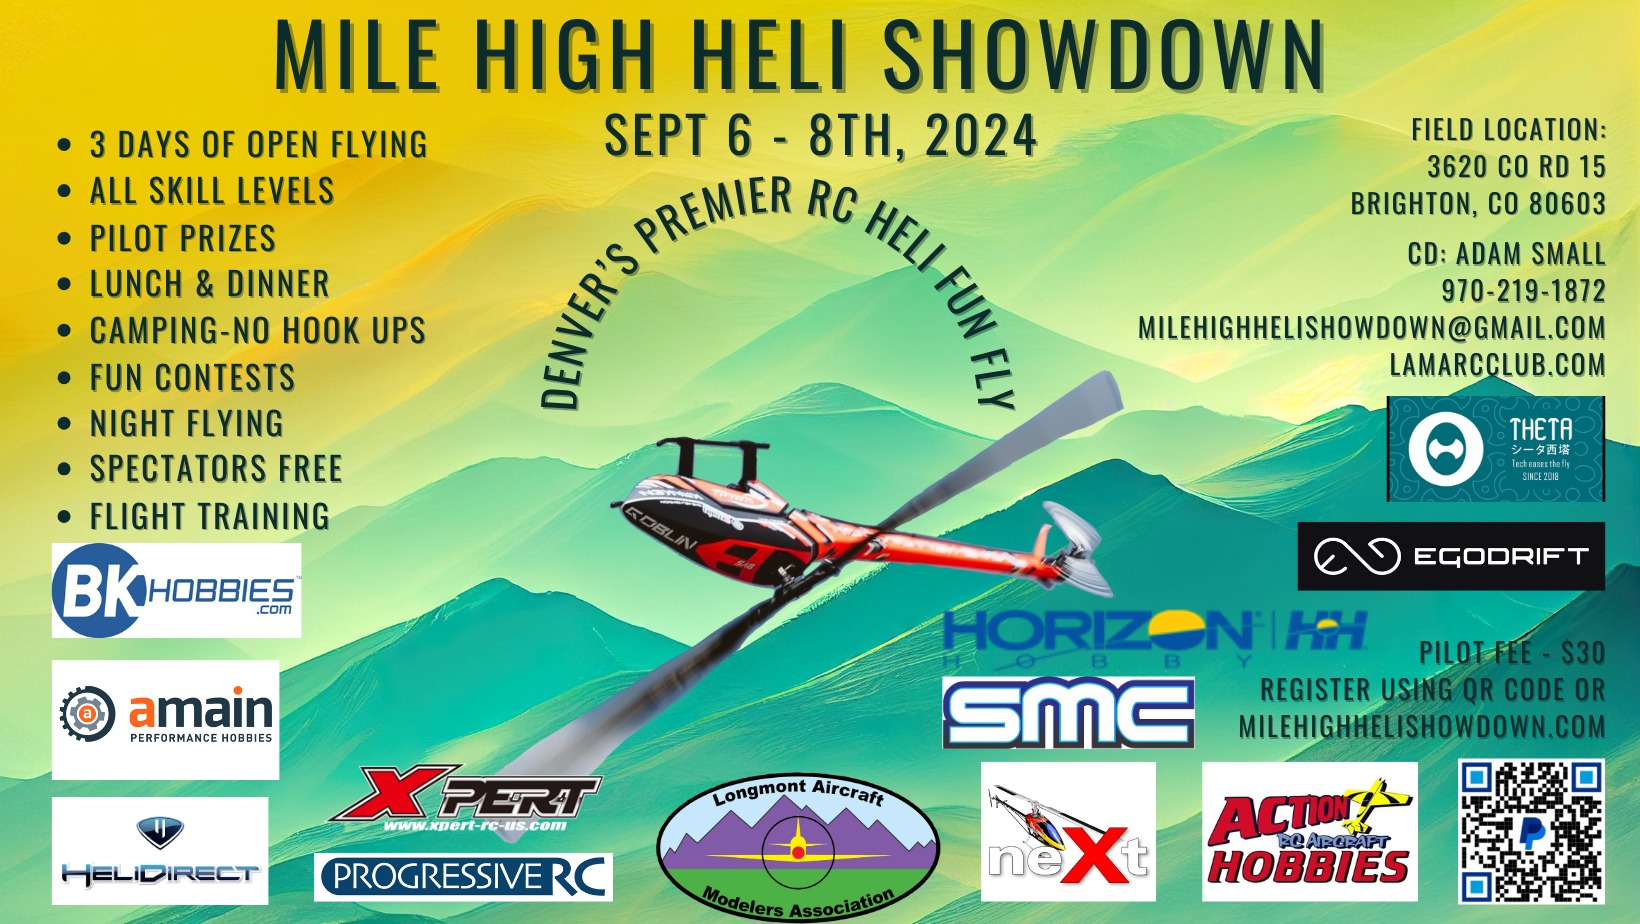 Mile High Heli Showdown Flyer 2022